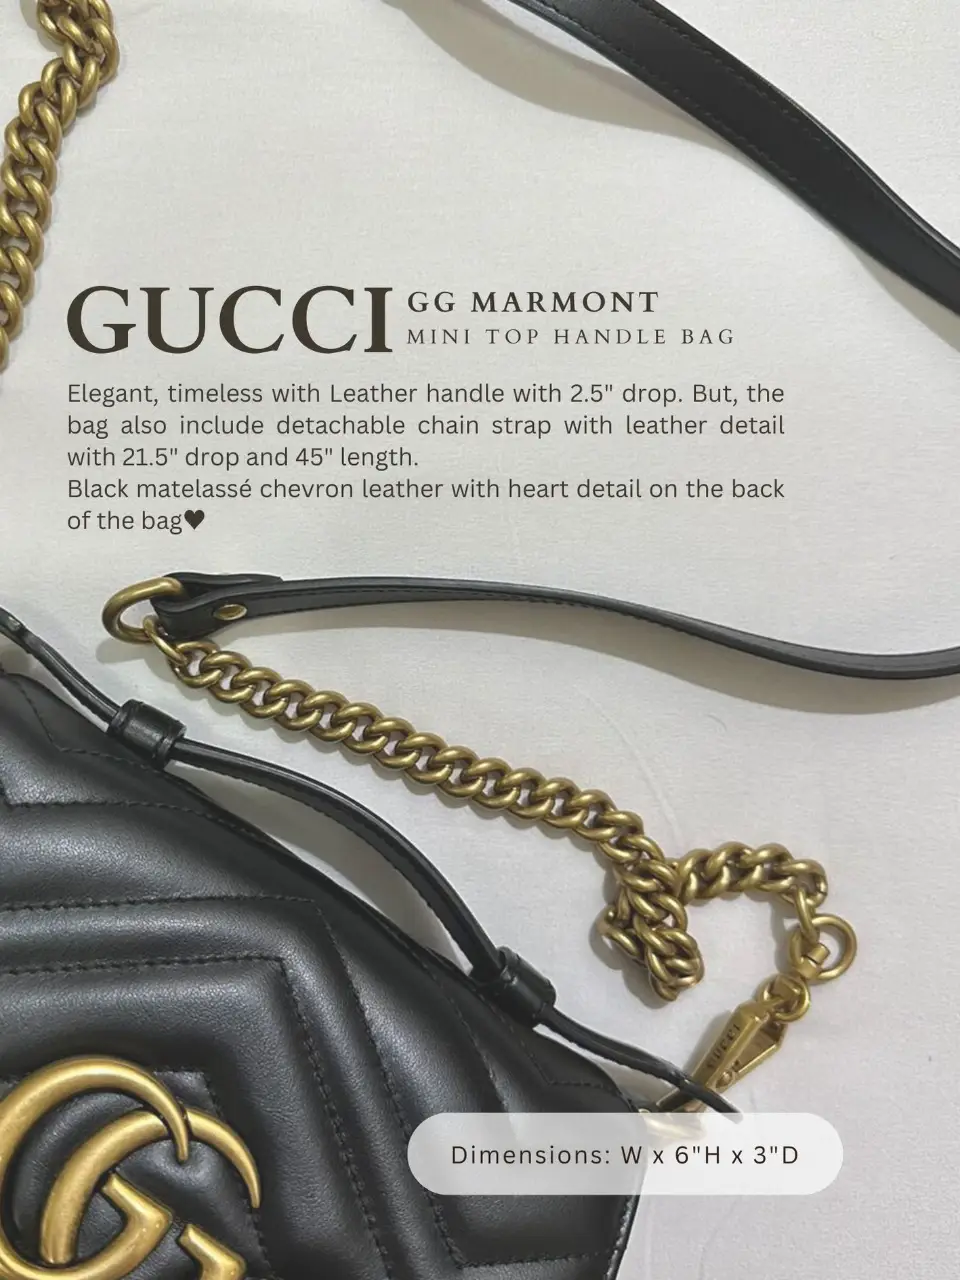 Review Louis Vuitton Bag harga 17 juta?, Gallery posted by Karina Jovita